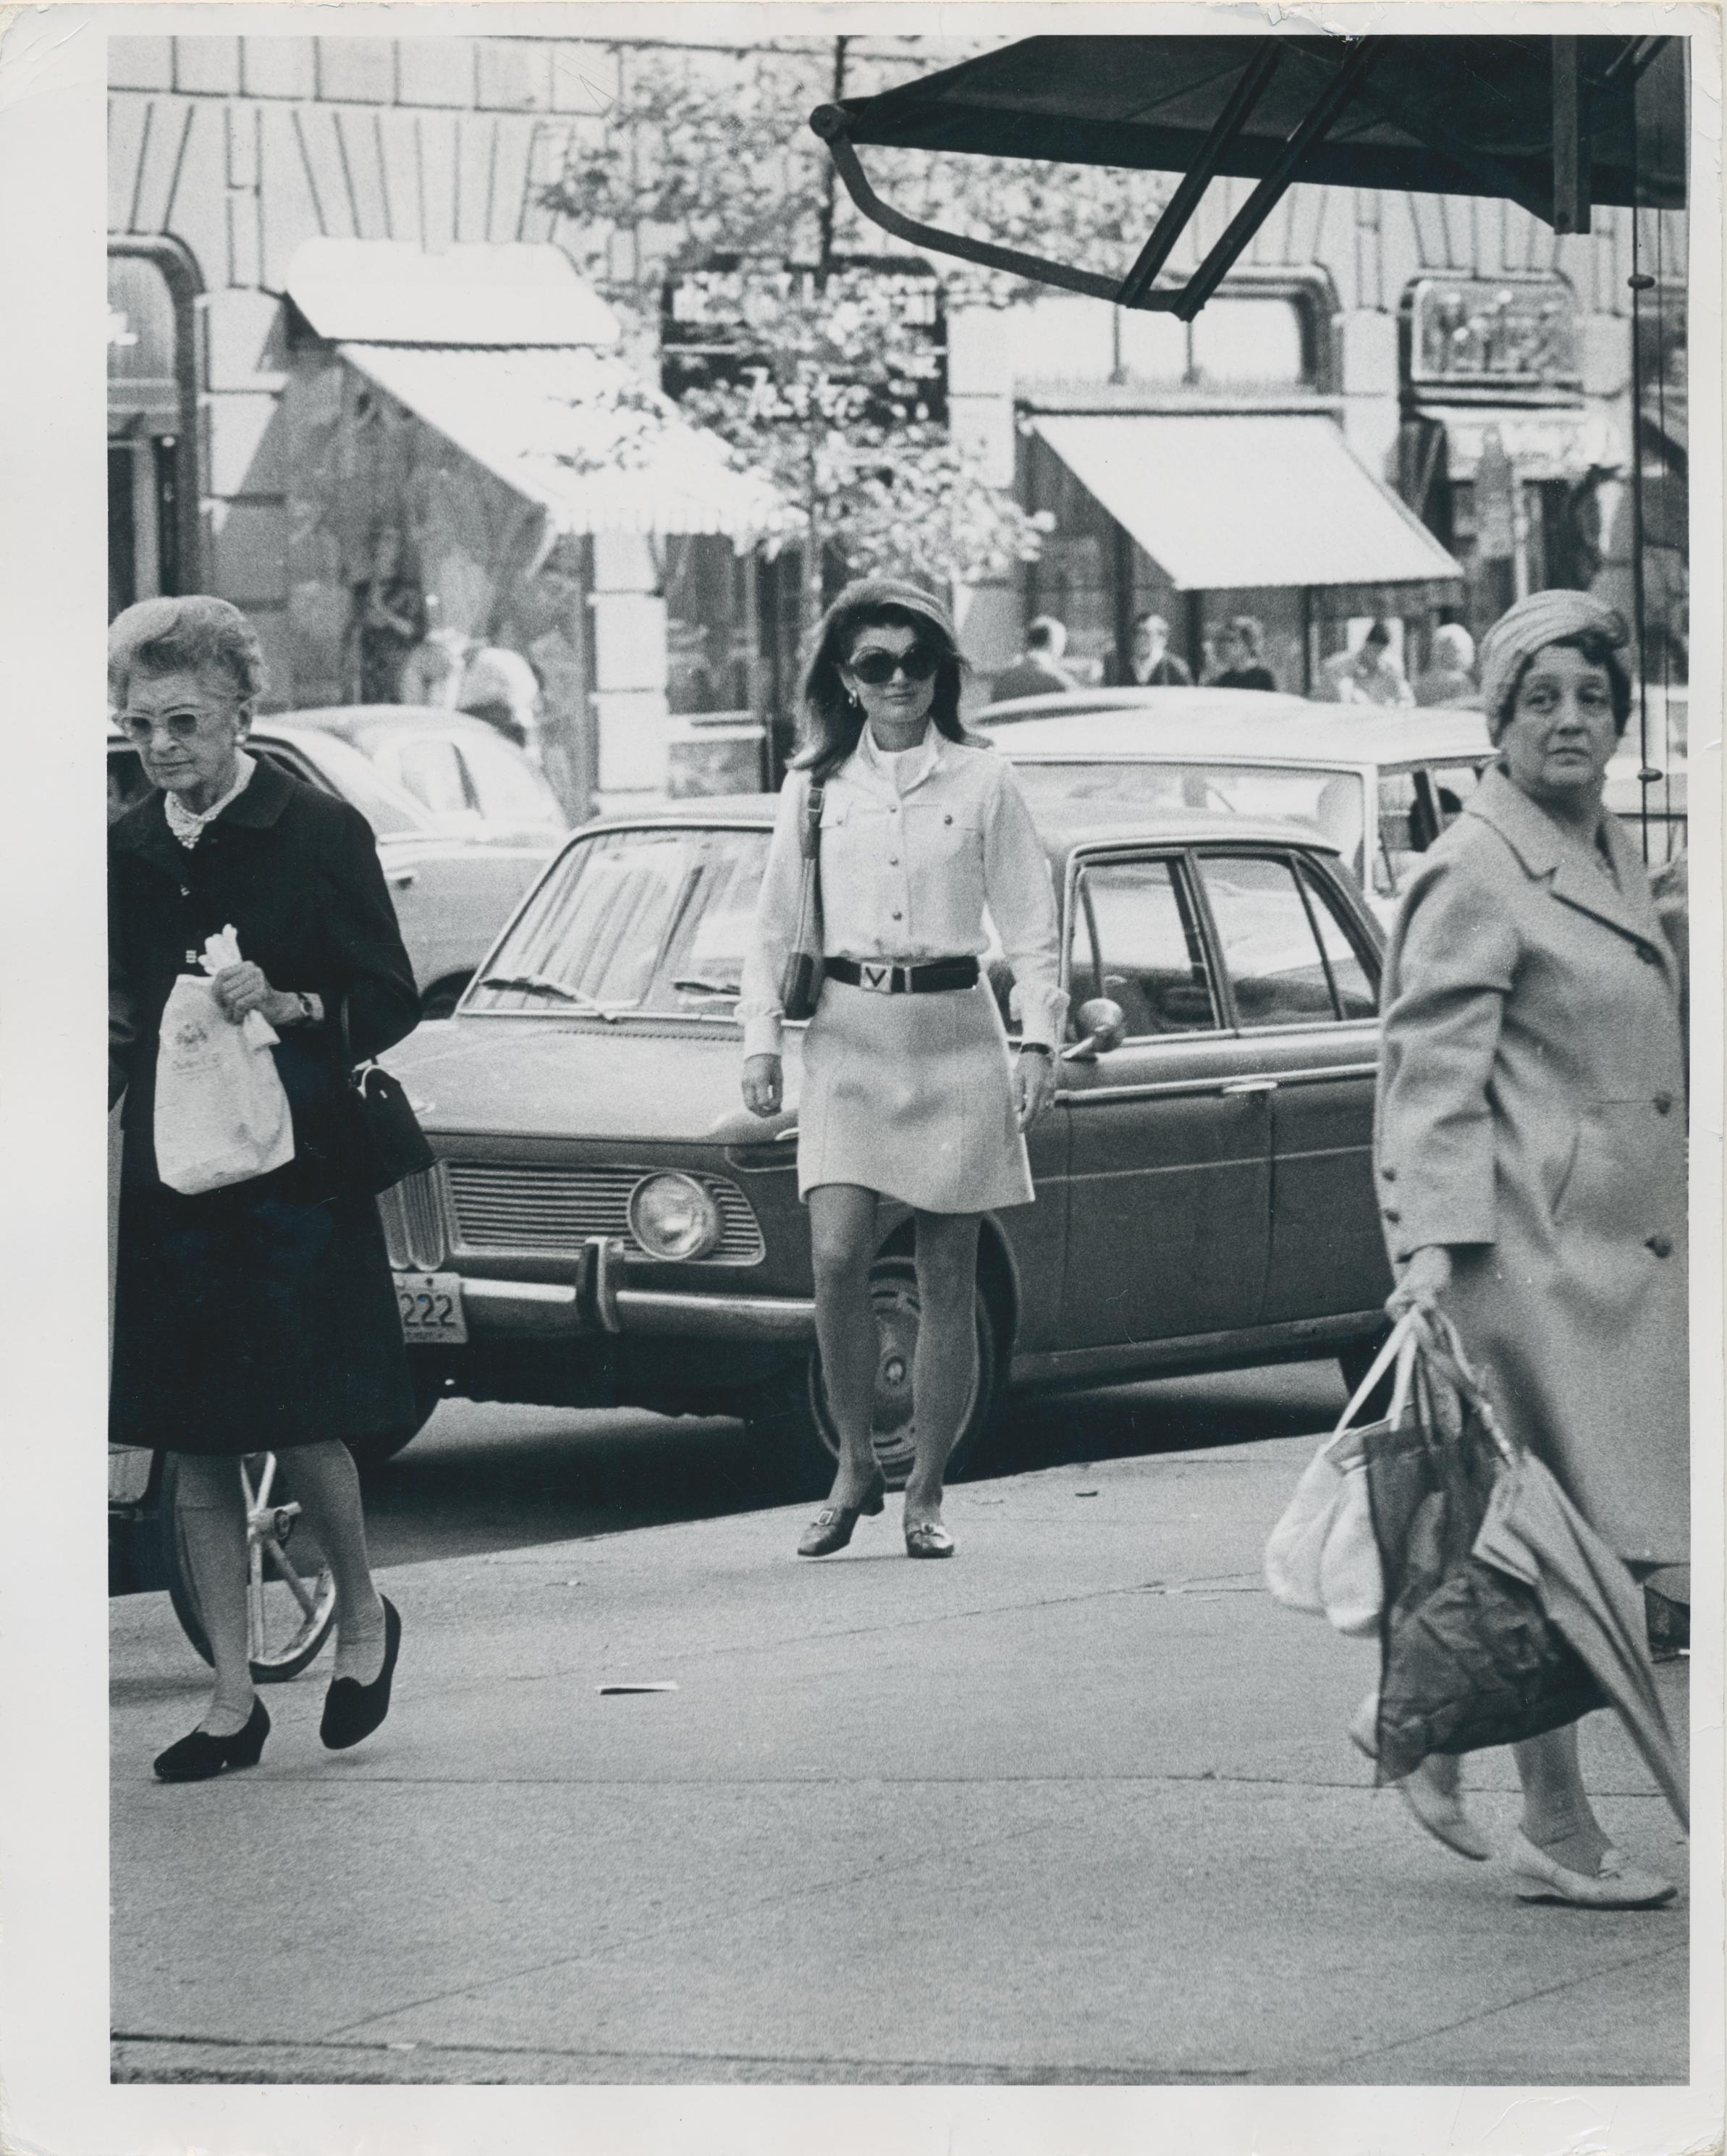 Jackie Onassis; Street Photography; Black and White, 1970s, 25, 2 x 20, 2 cm - Art by Thomas J. Wargacki